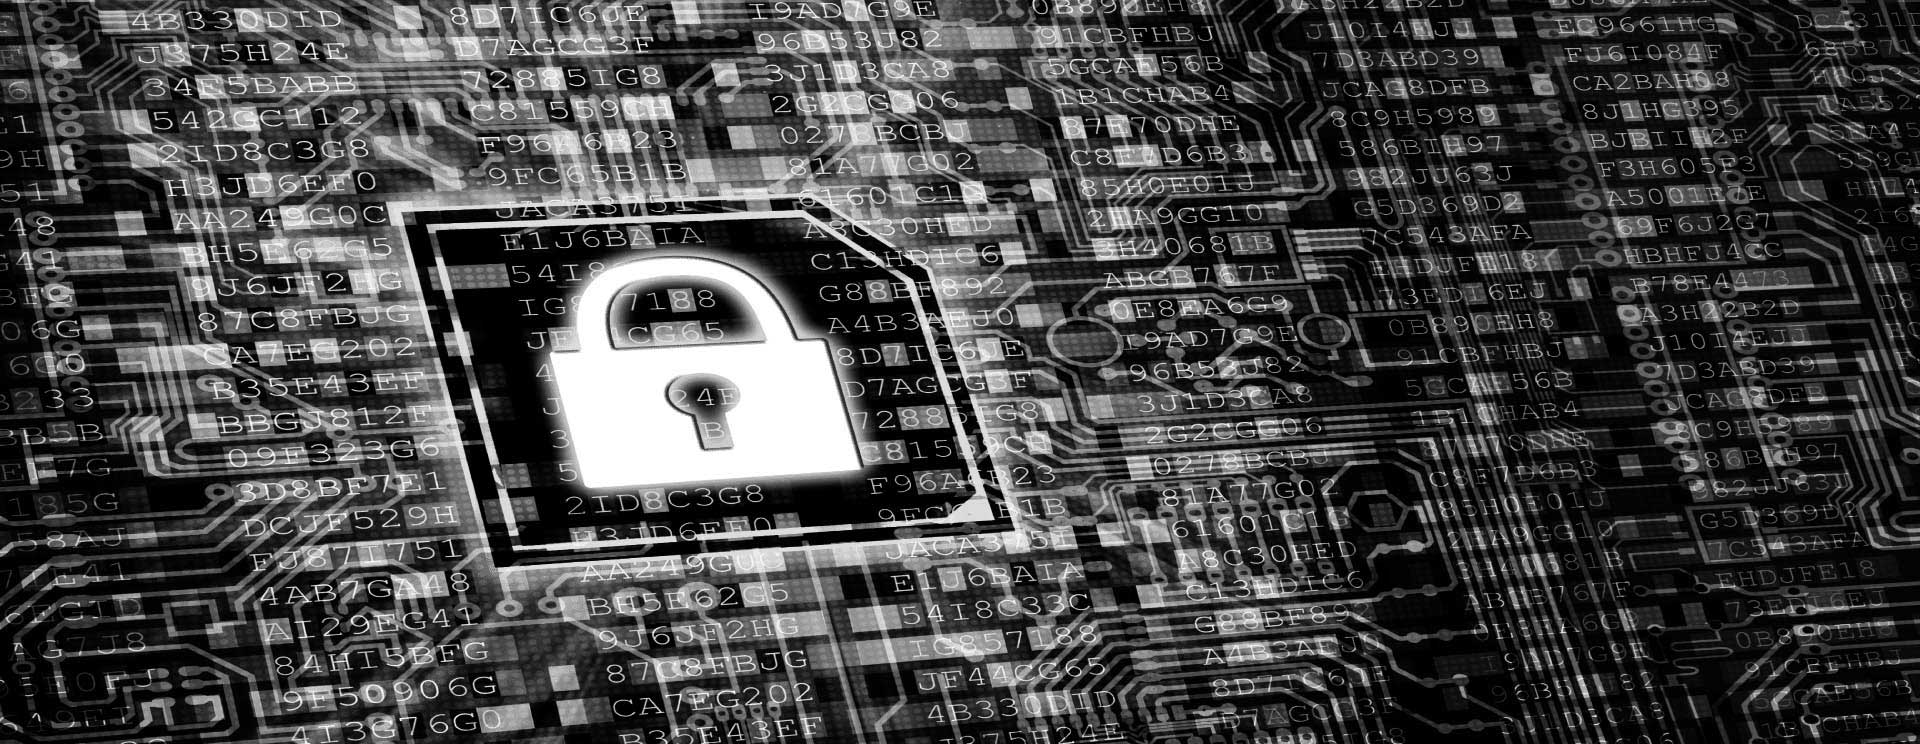 data security key considerations